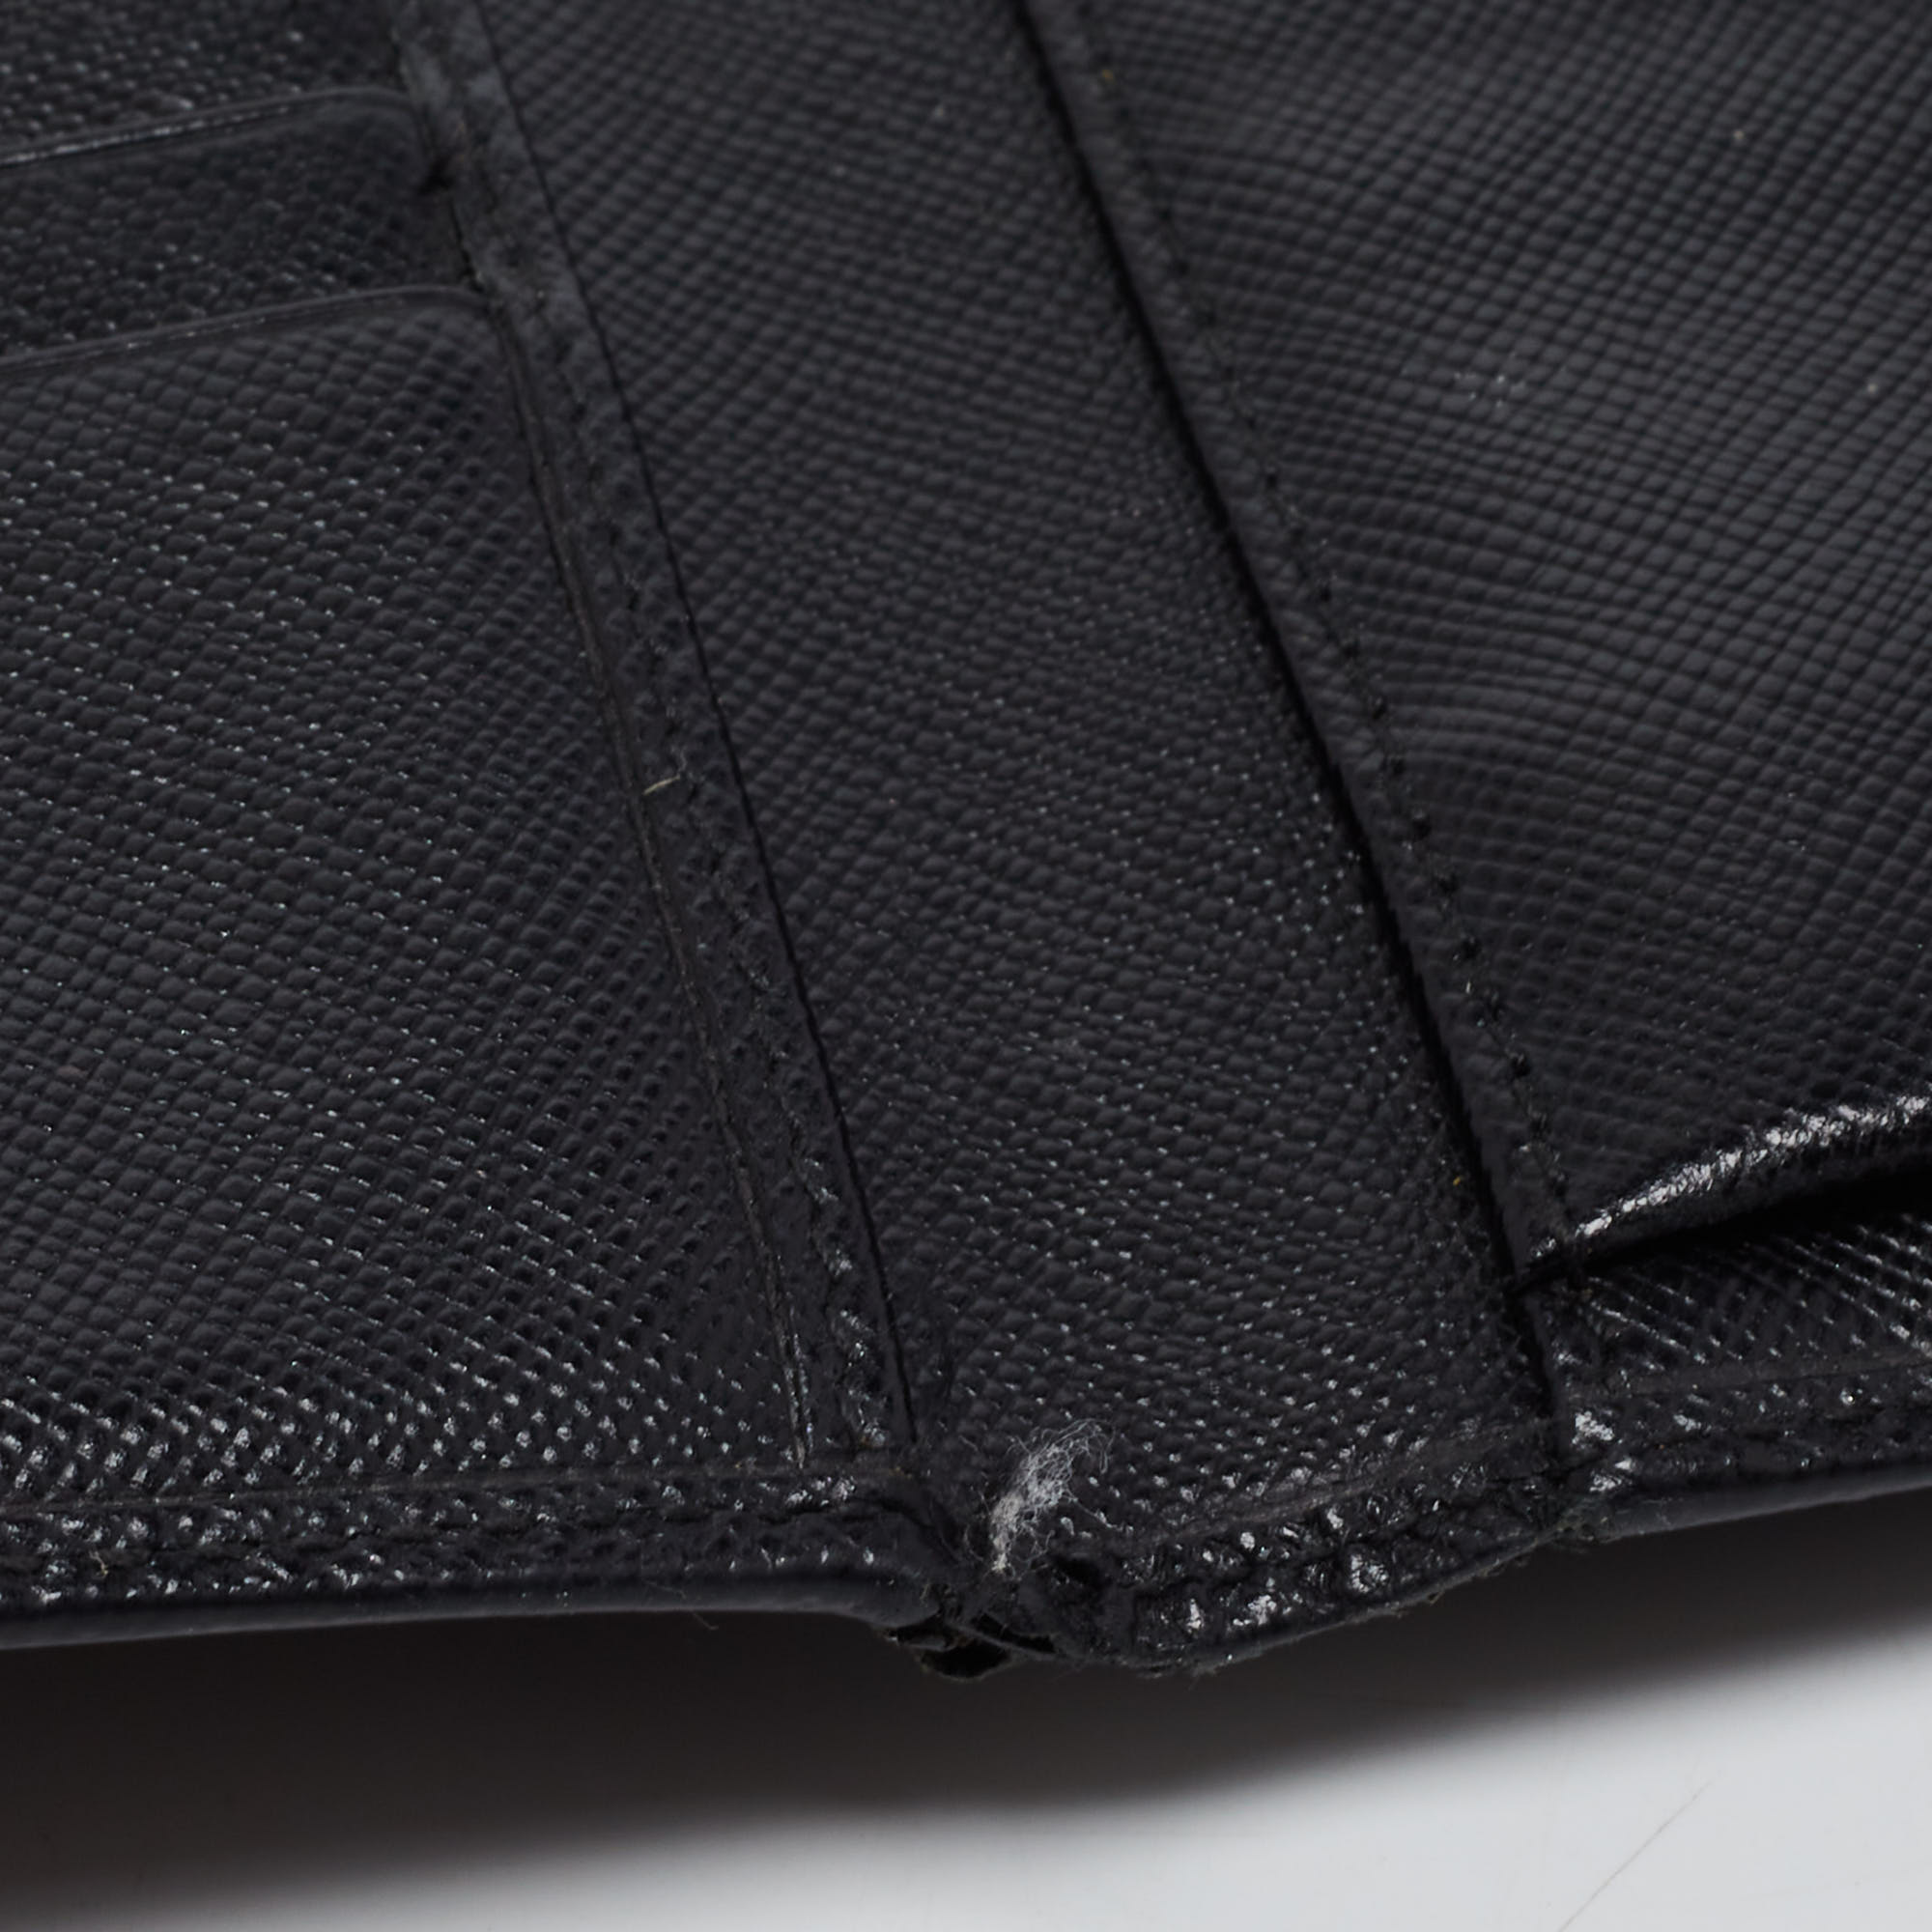 Prada Black Saffiano Metal Leather Triangle Logo Trifold Wallet